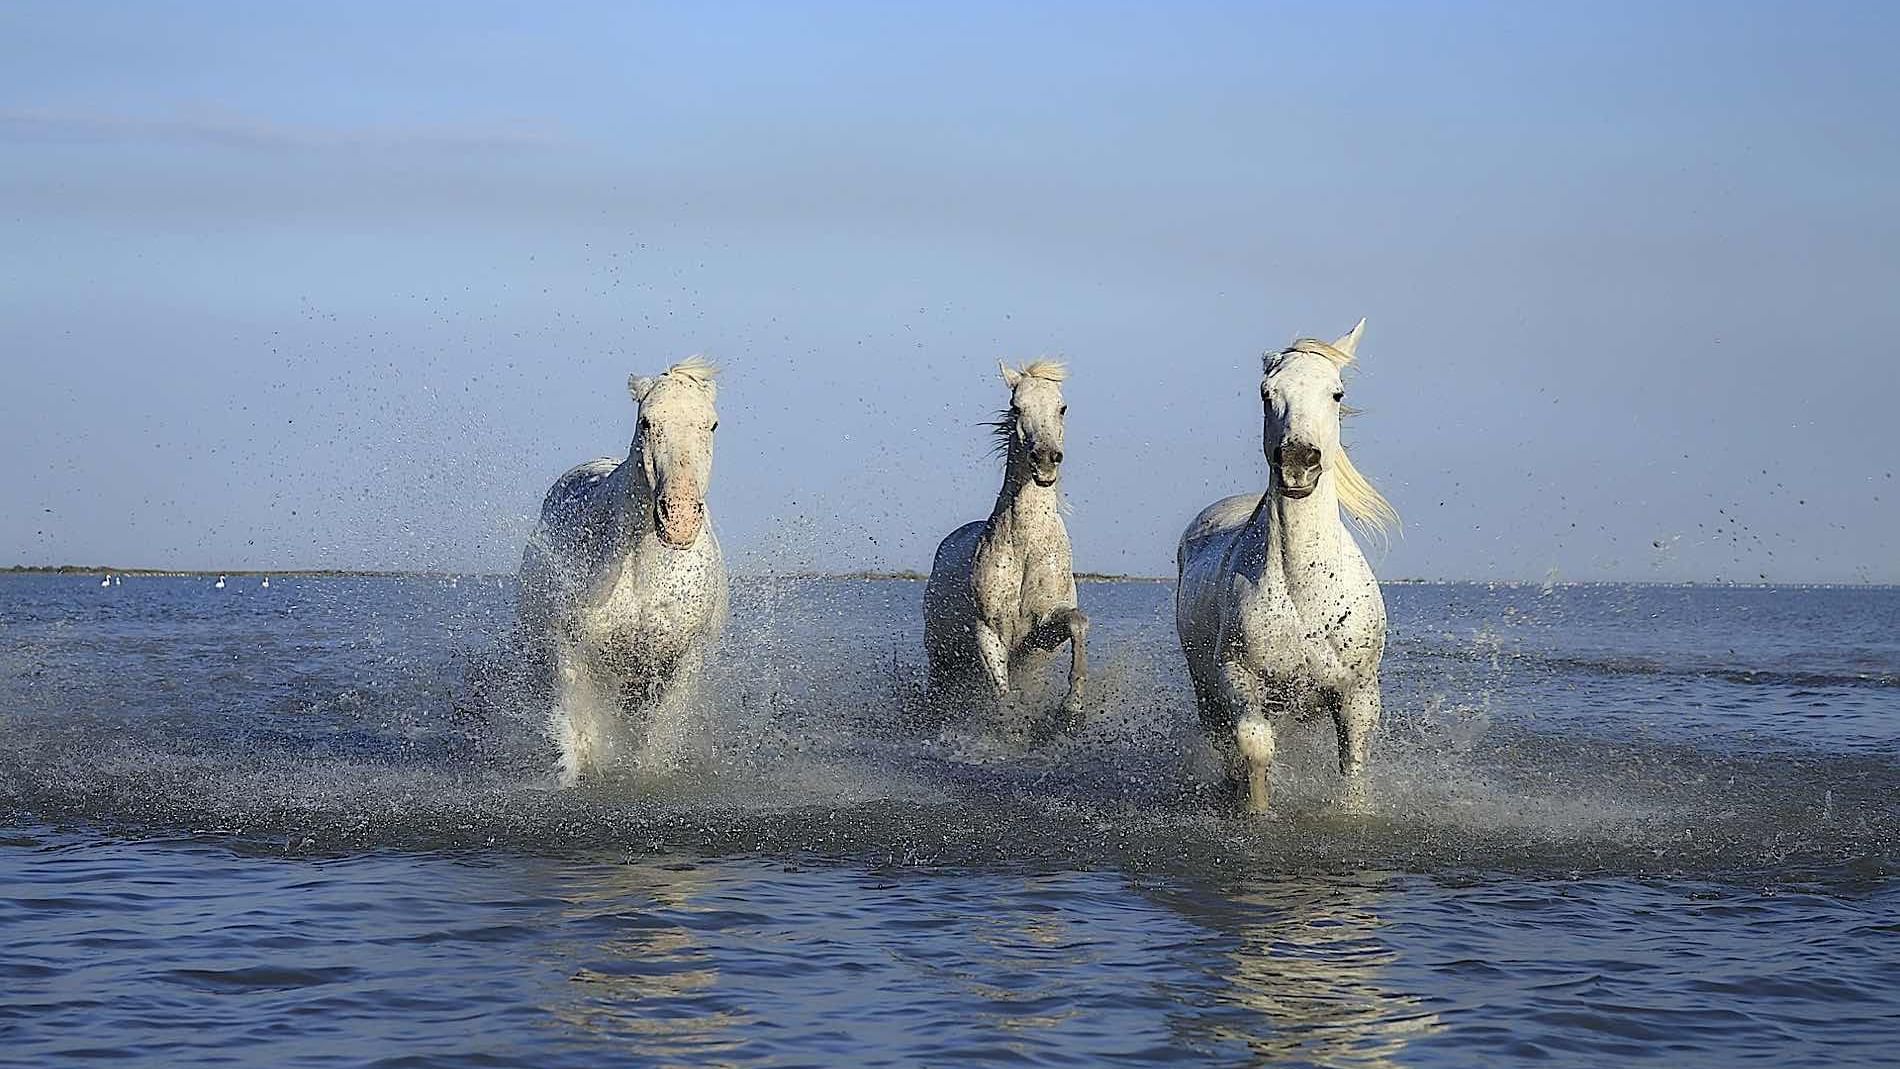 Three horses running through water at The Originals Hotels